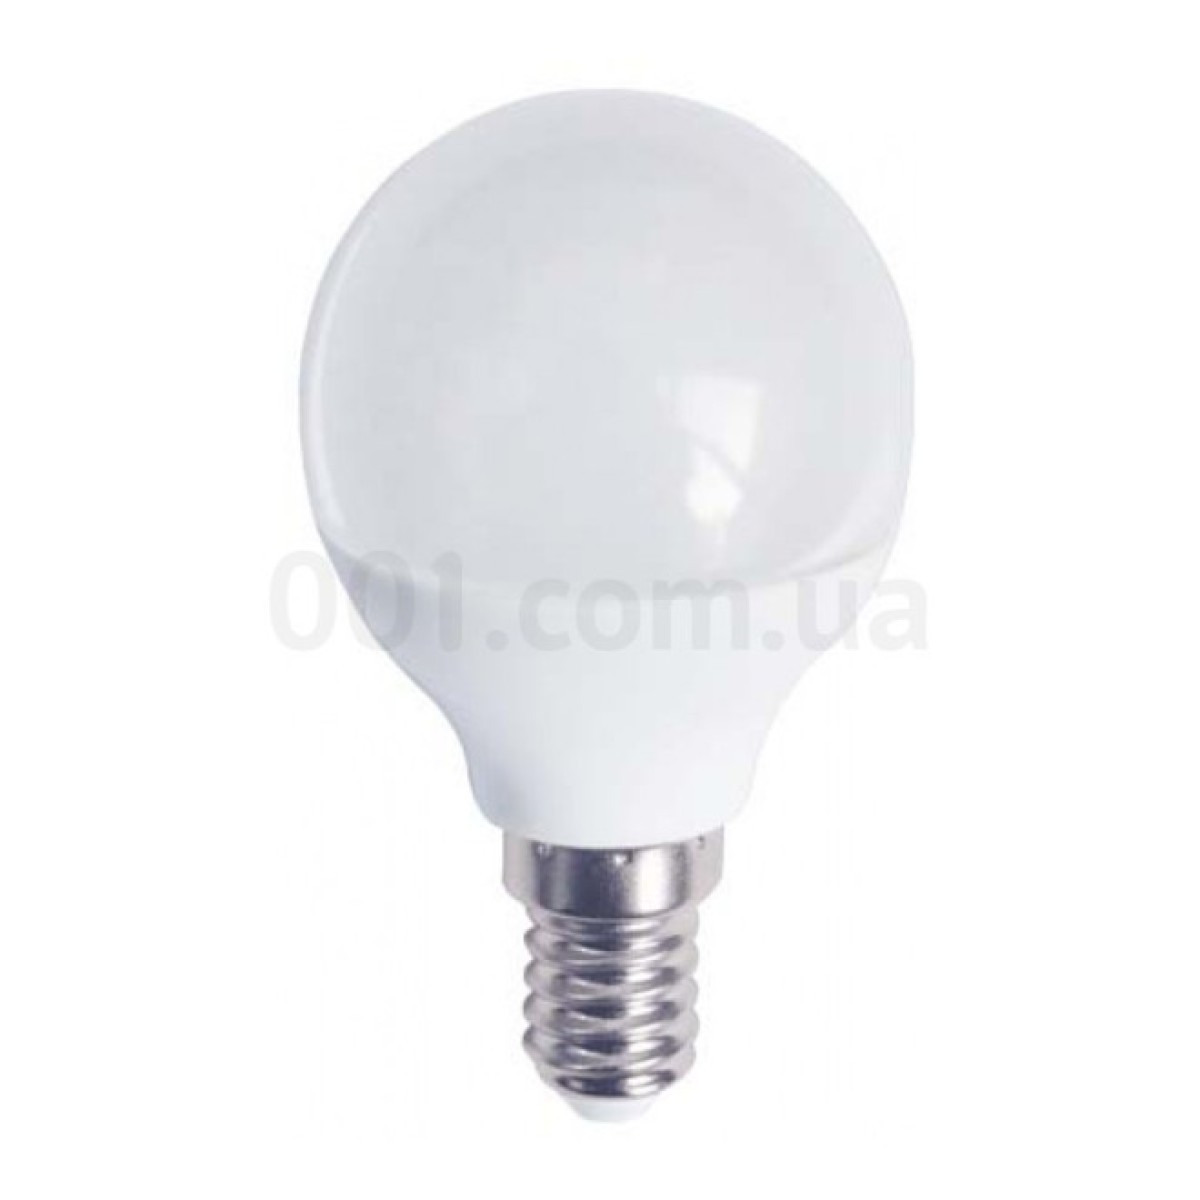 Светодиодная лампа LB-745 P45 (шар) 6Вт 6400K E14, Feron 98_98.jpg